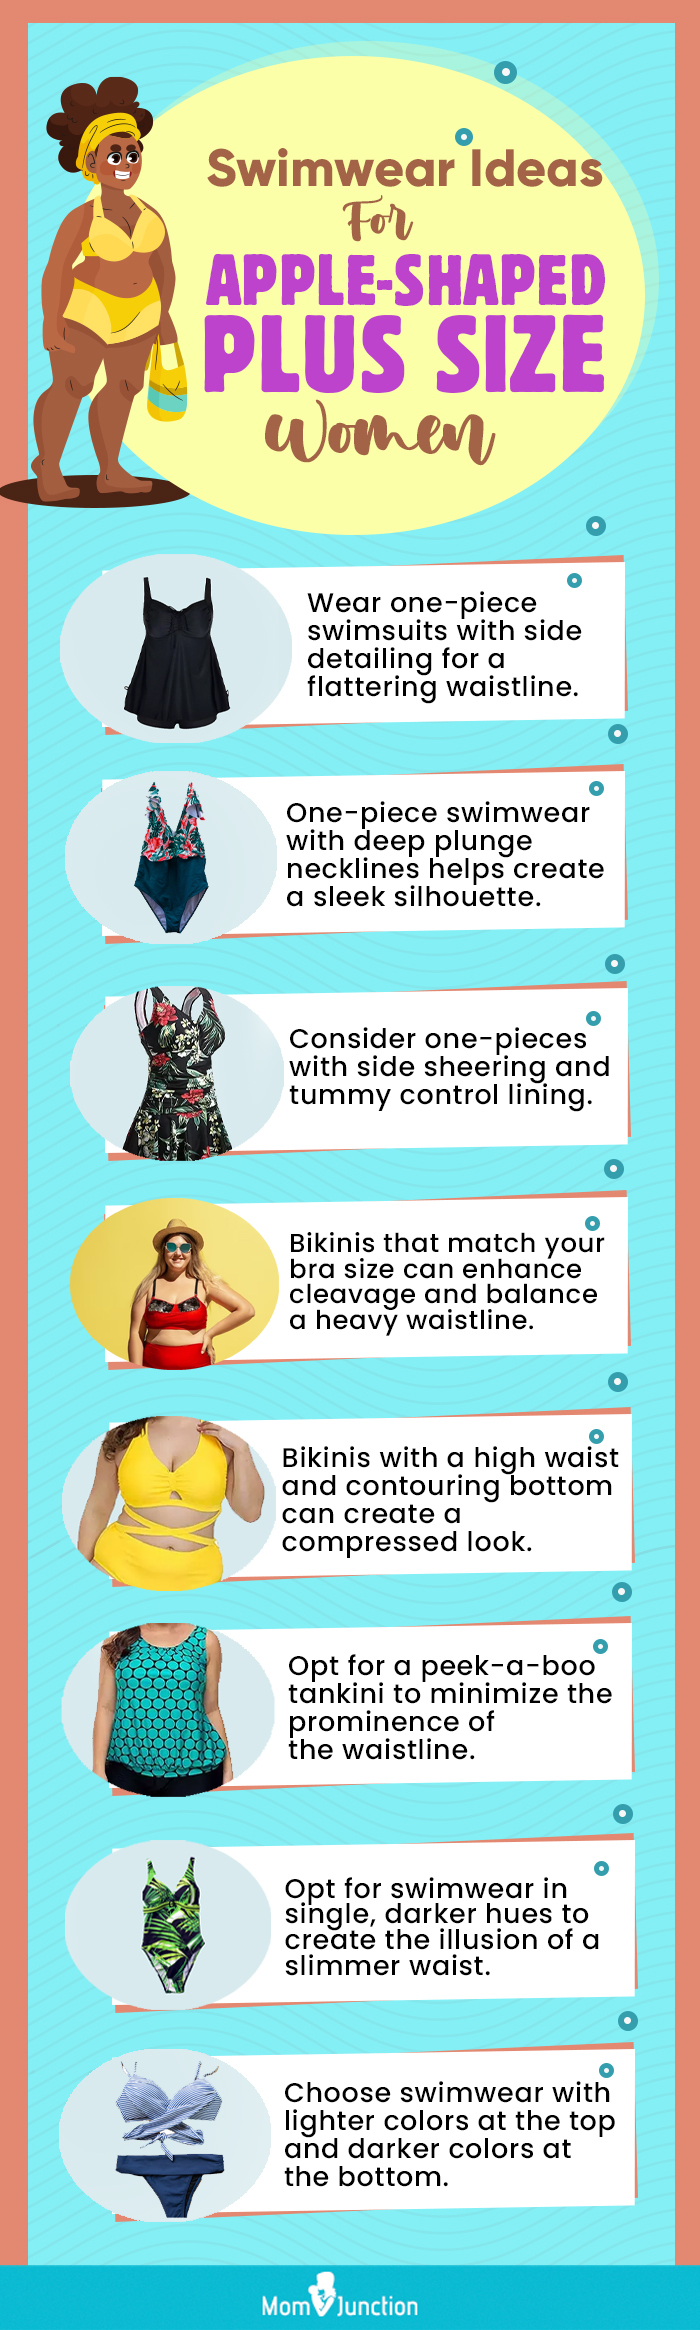 Swimwear Ideas For Apple-Shaped Plus Size Women (infographic)